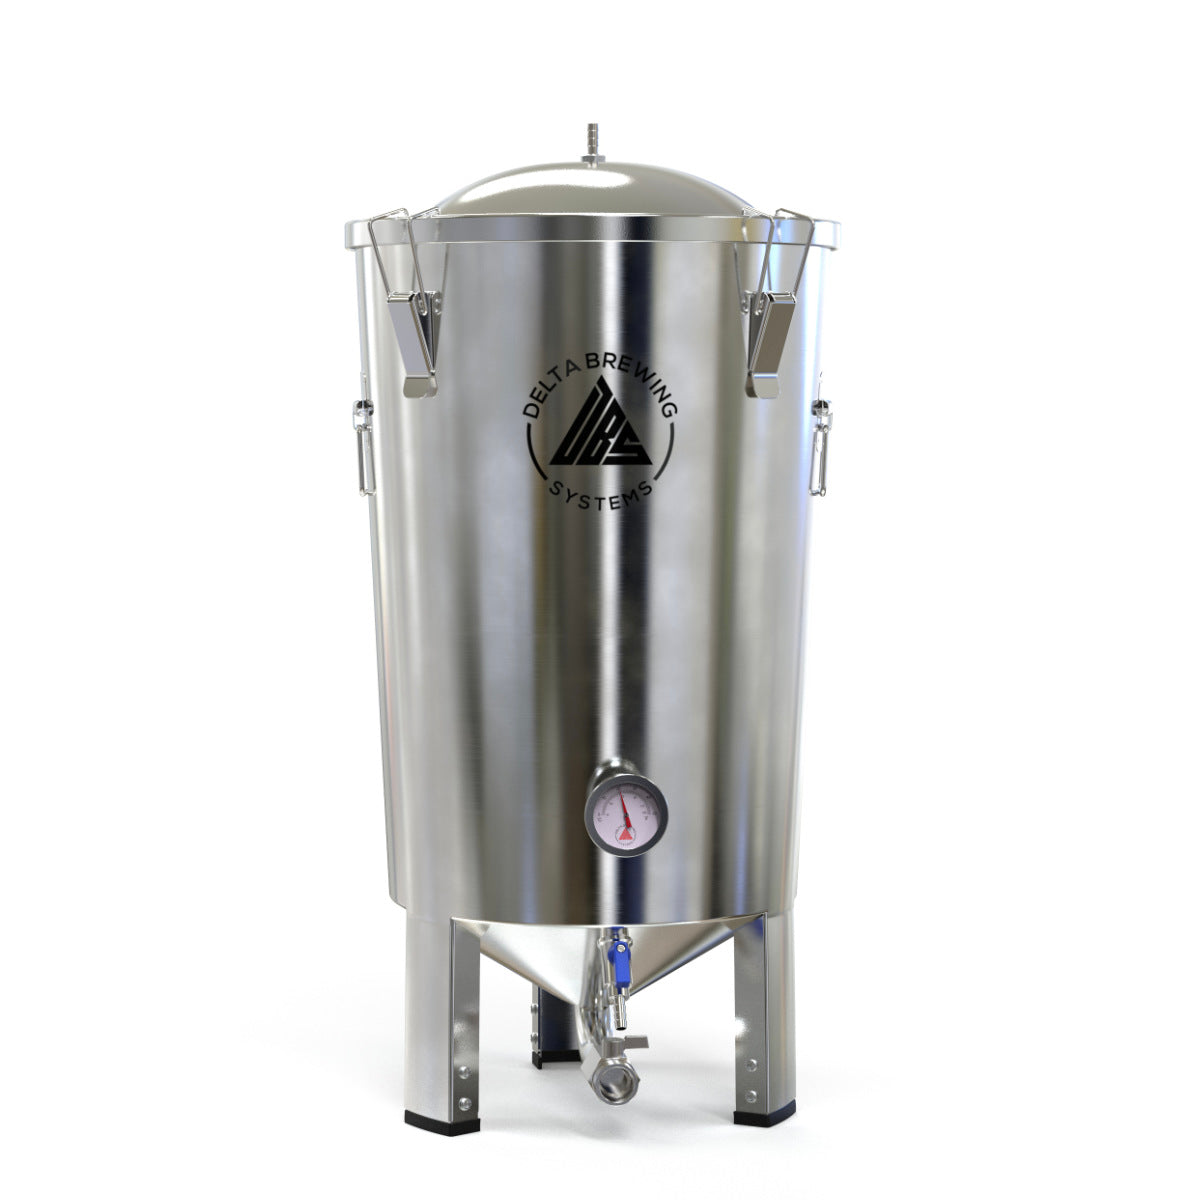 8 gallon fermenter with drain valve